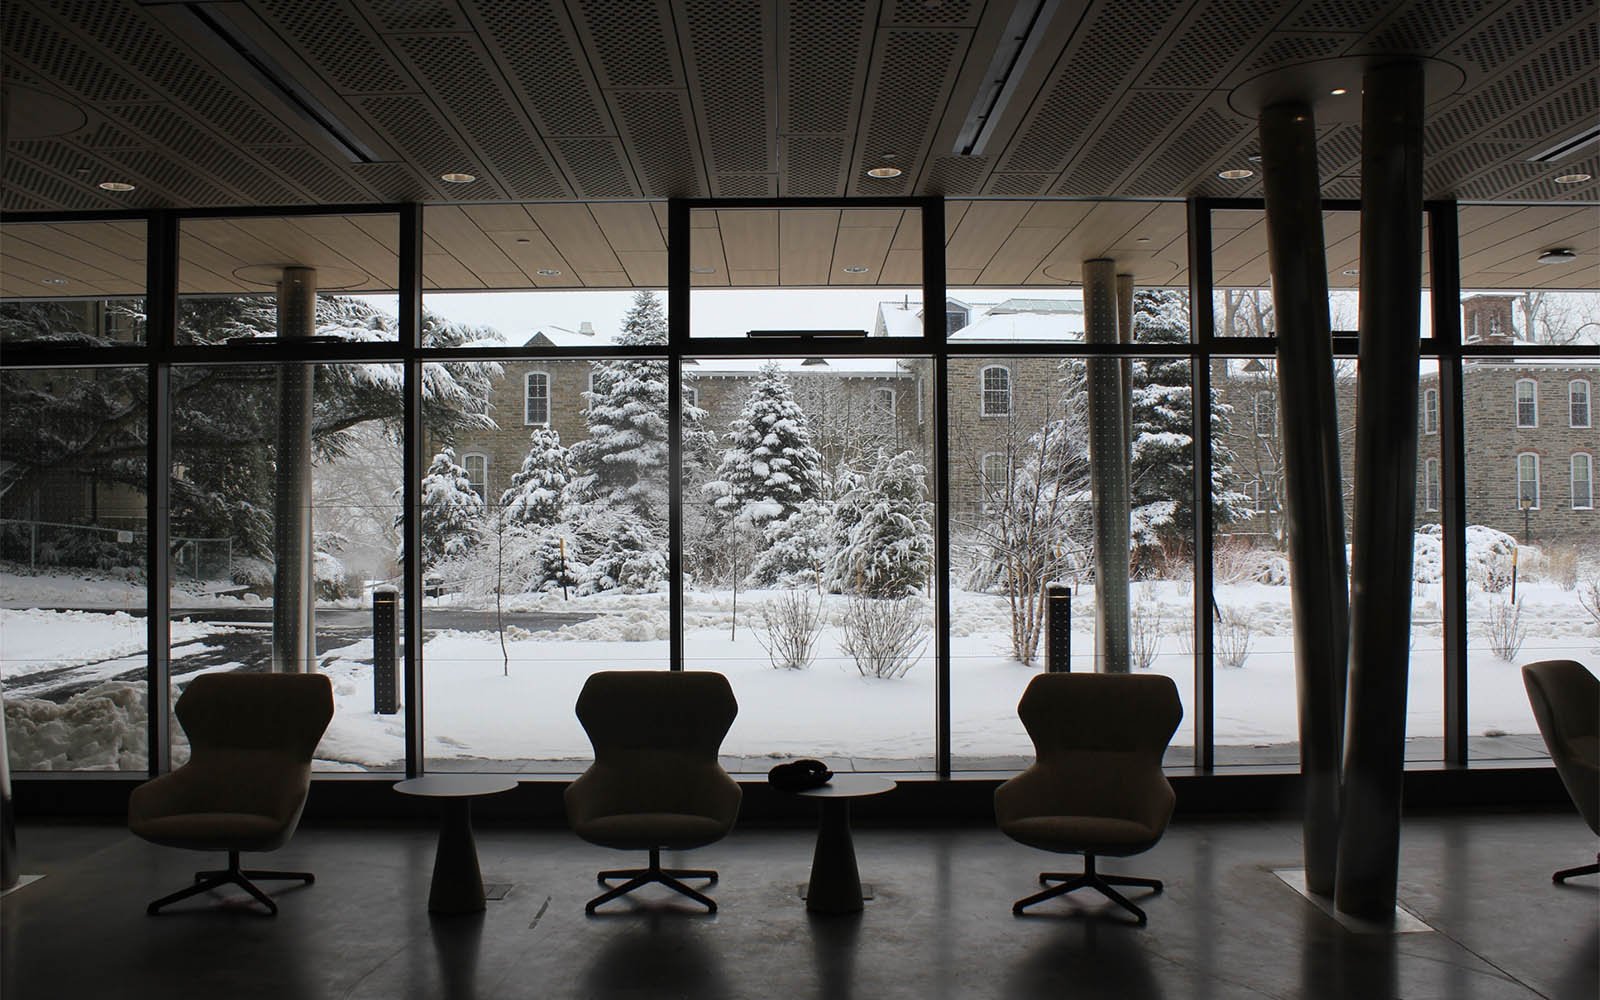 snowy campus scence